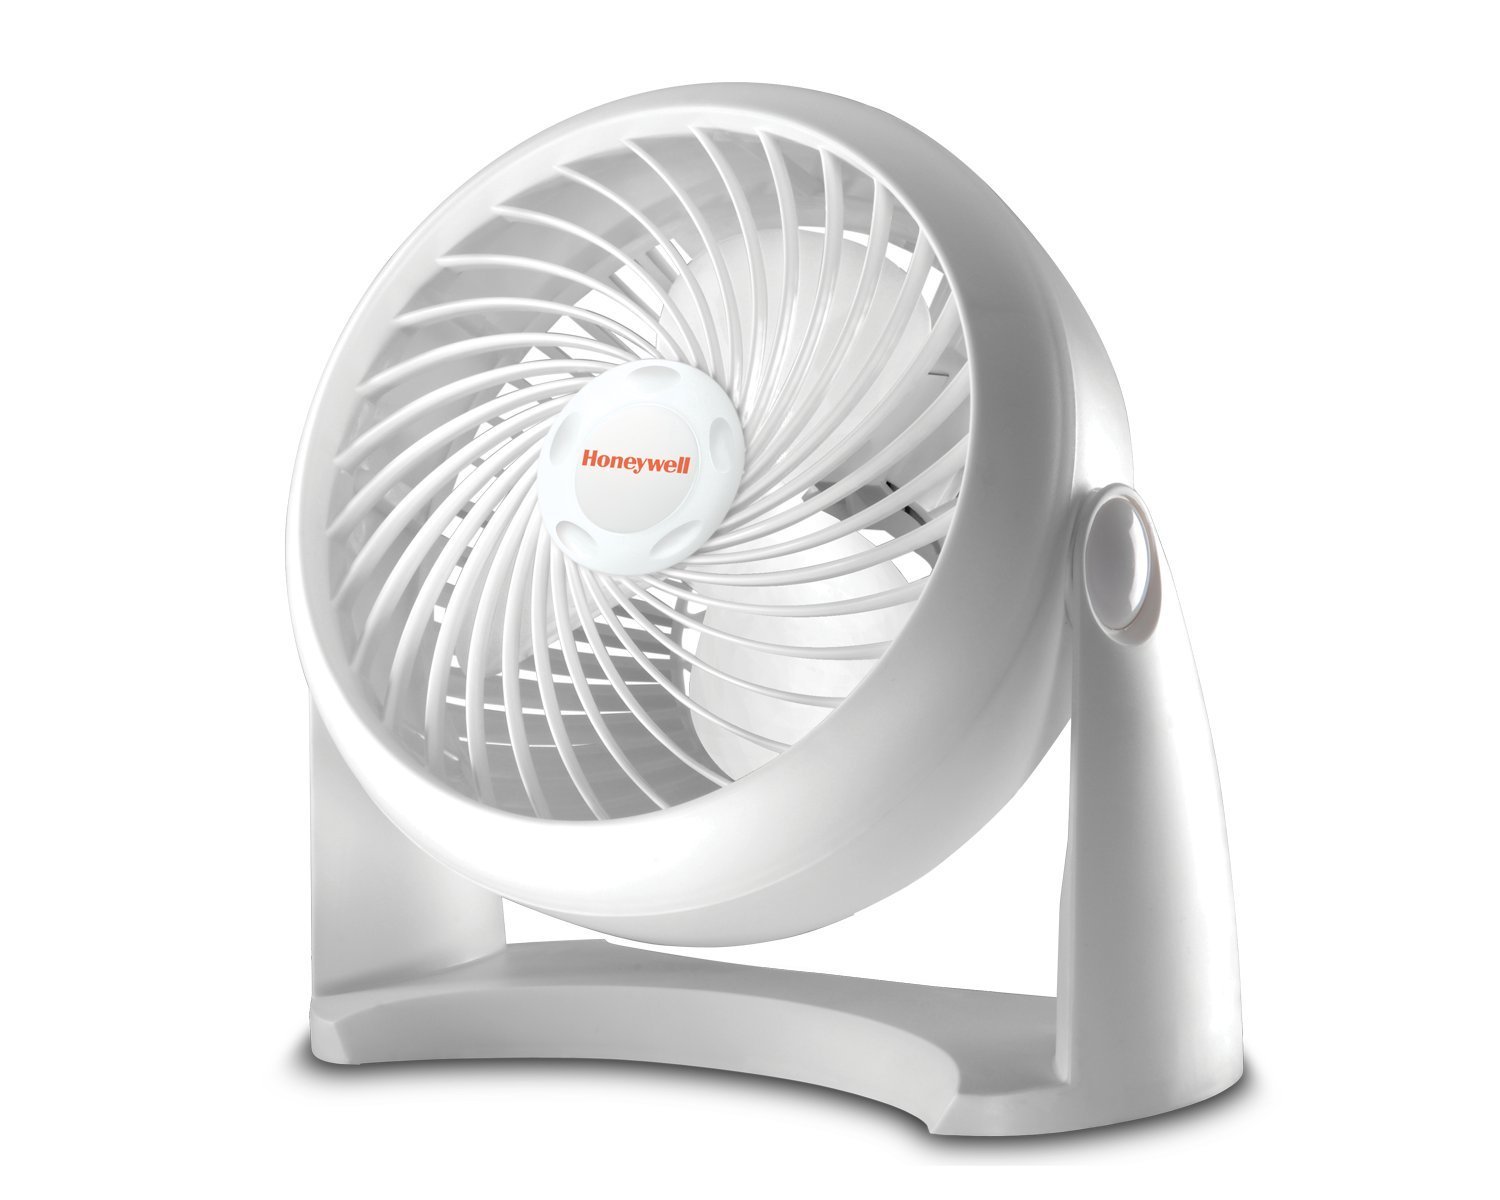 Honeywell Tabletop Air-Circulator Fan in White – Just $10.79!